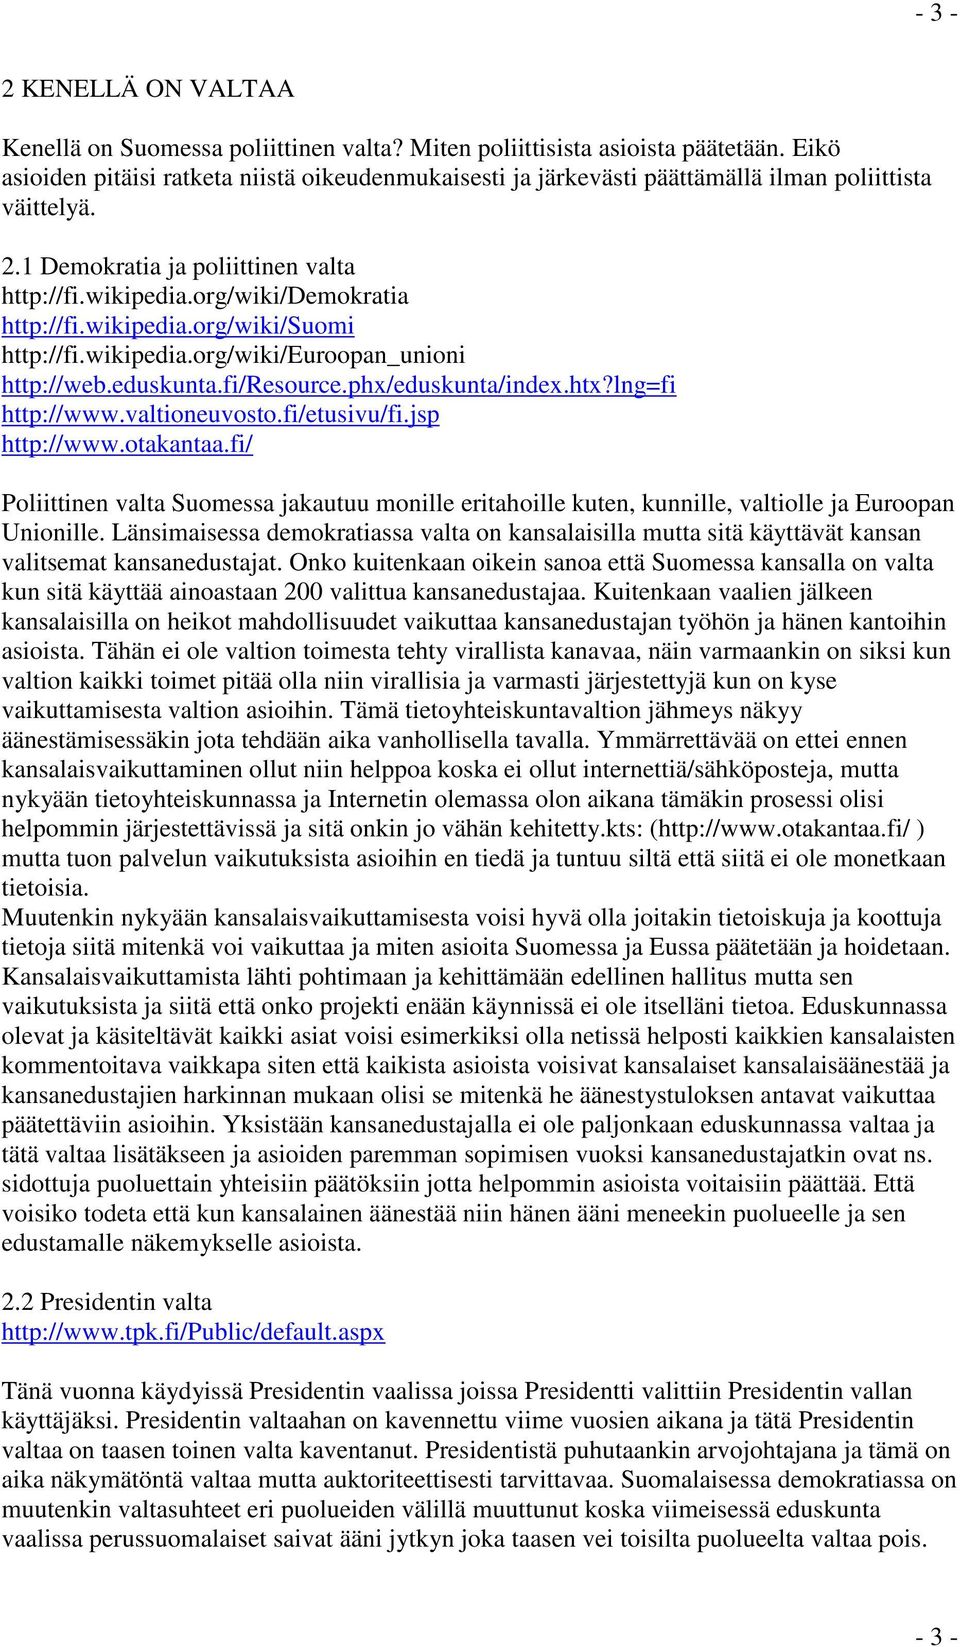 wikipedia.org/wiki/suomi http://fi.wikipedia.org/wiki/euroopan_unioni http://web.eduskunta.fi/resource.phx/eduskunta/index.htx?lng=fi http://www.valtioneuvosto.fi/etusivu/fi.jsp http://www.otakantaa.